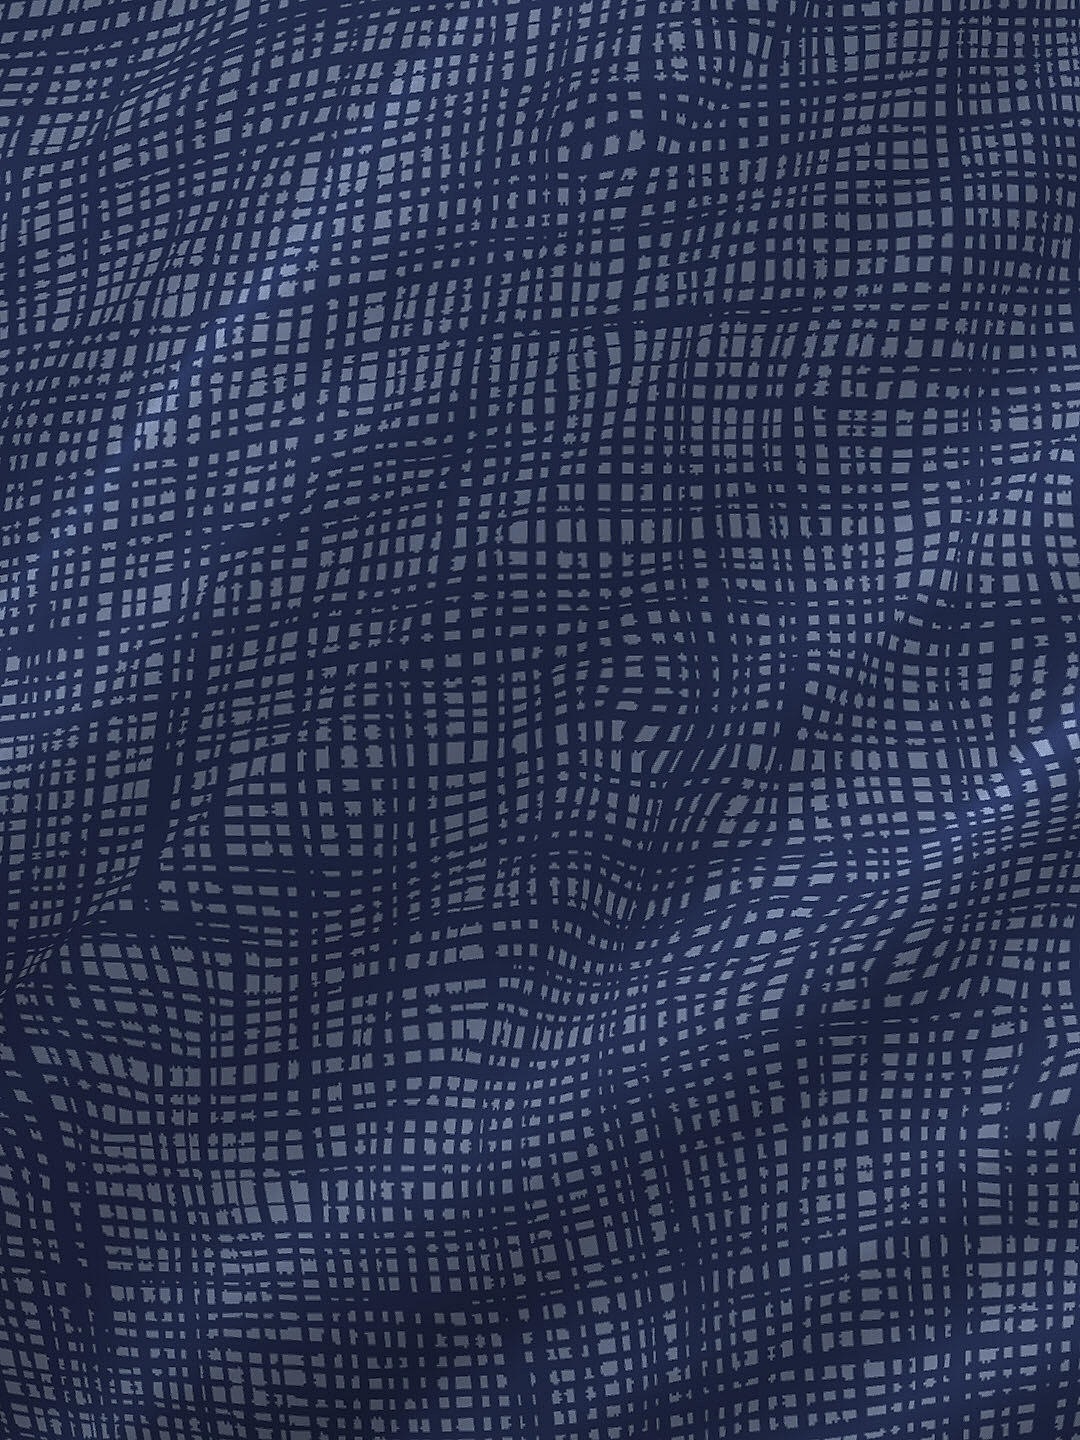 Gauze Textured Pure Cotton 160 Tc Single Bedsheet Set (Blue)